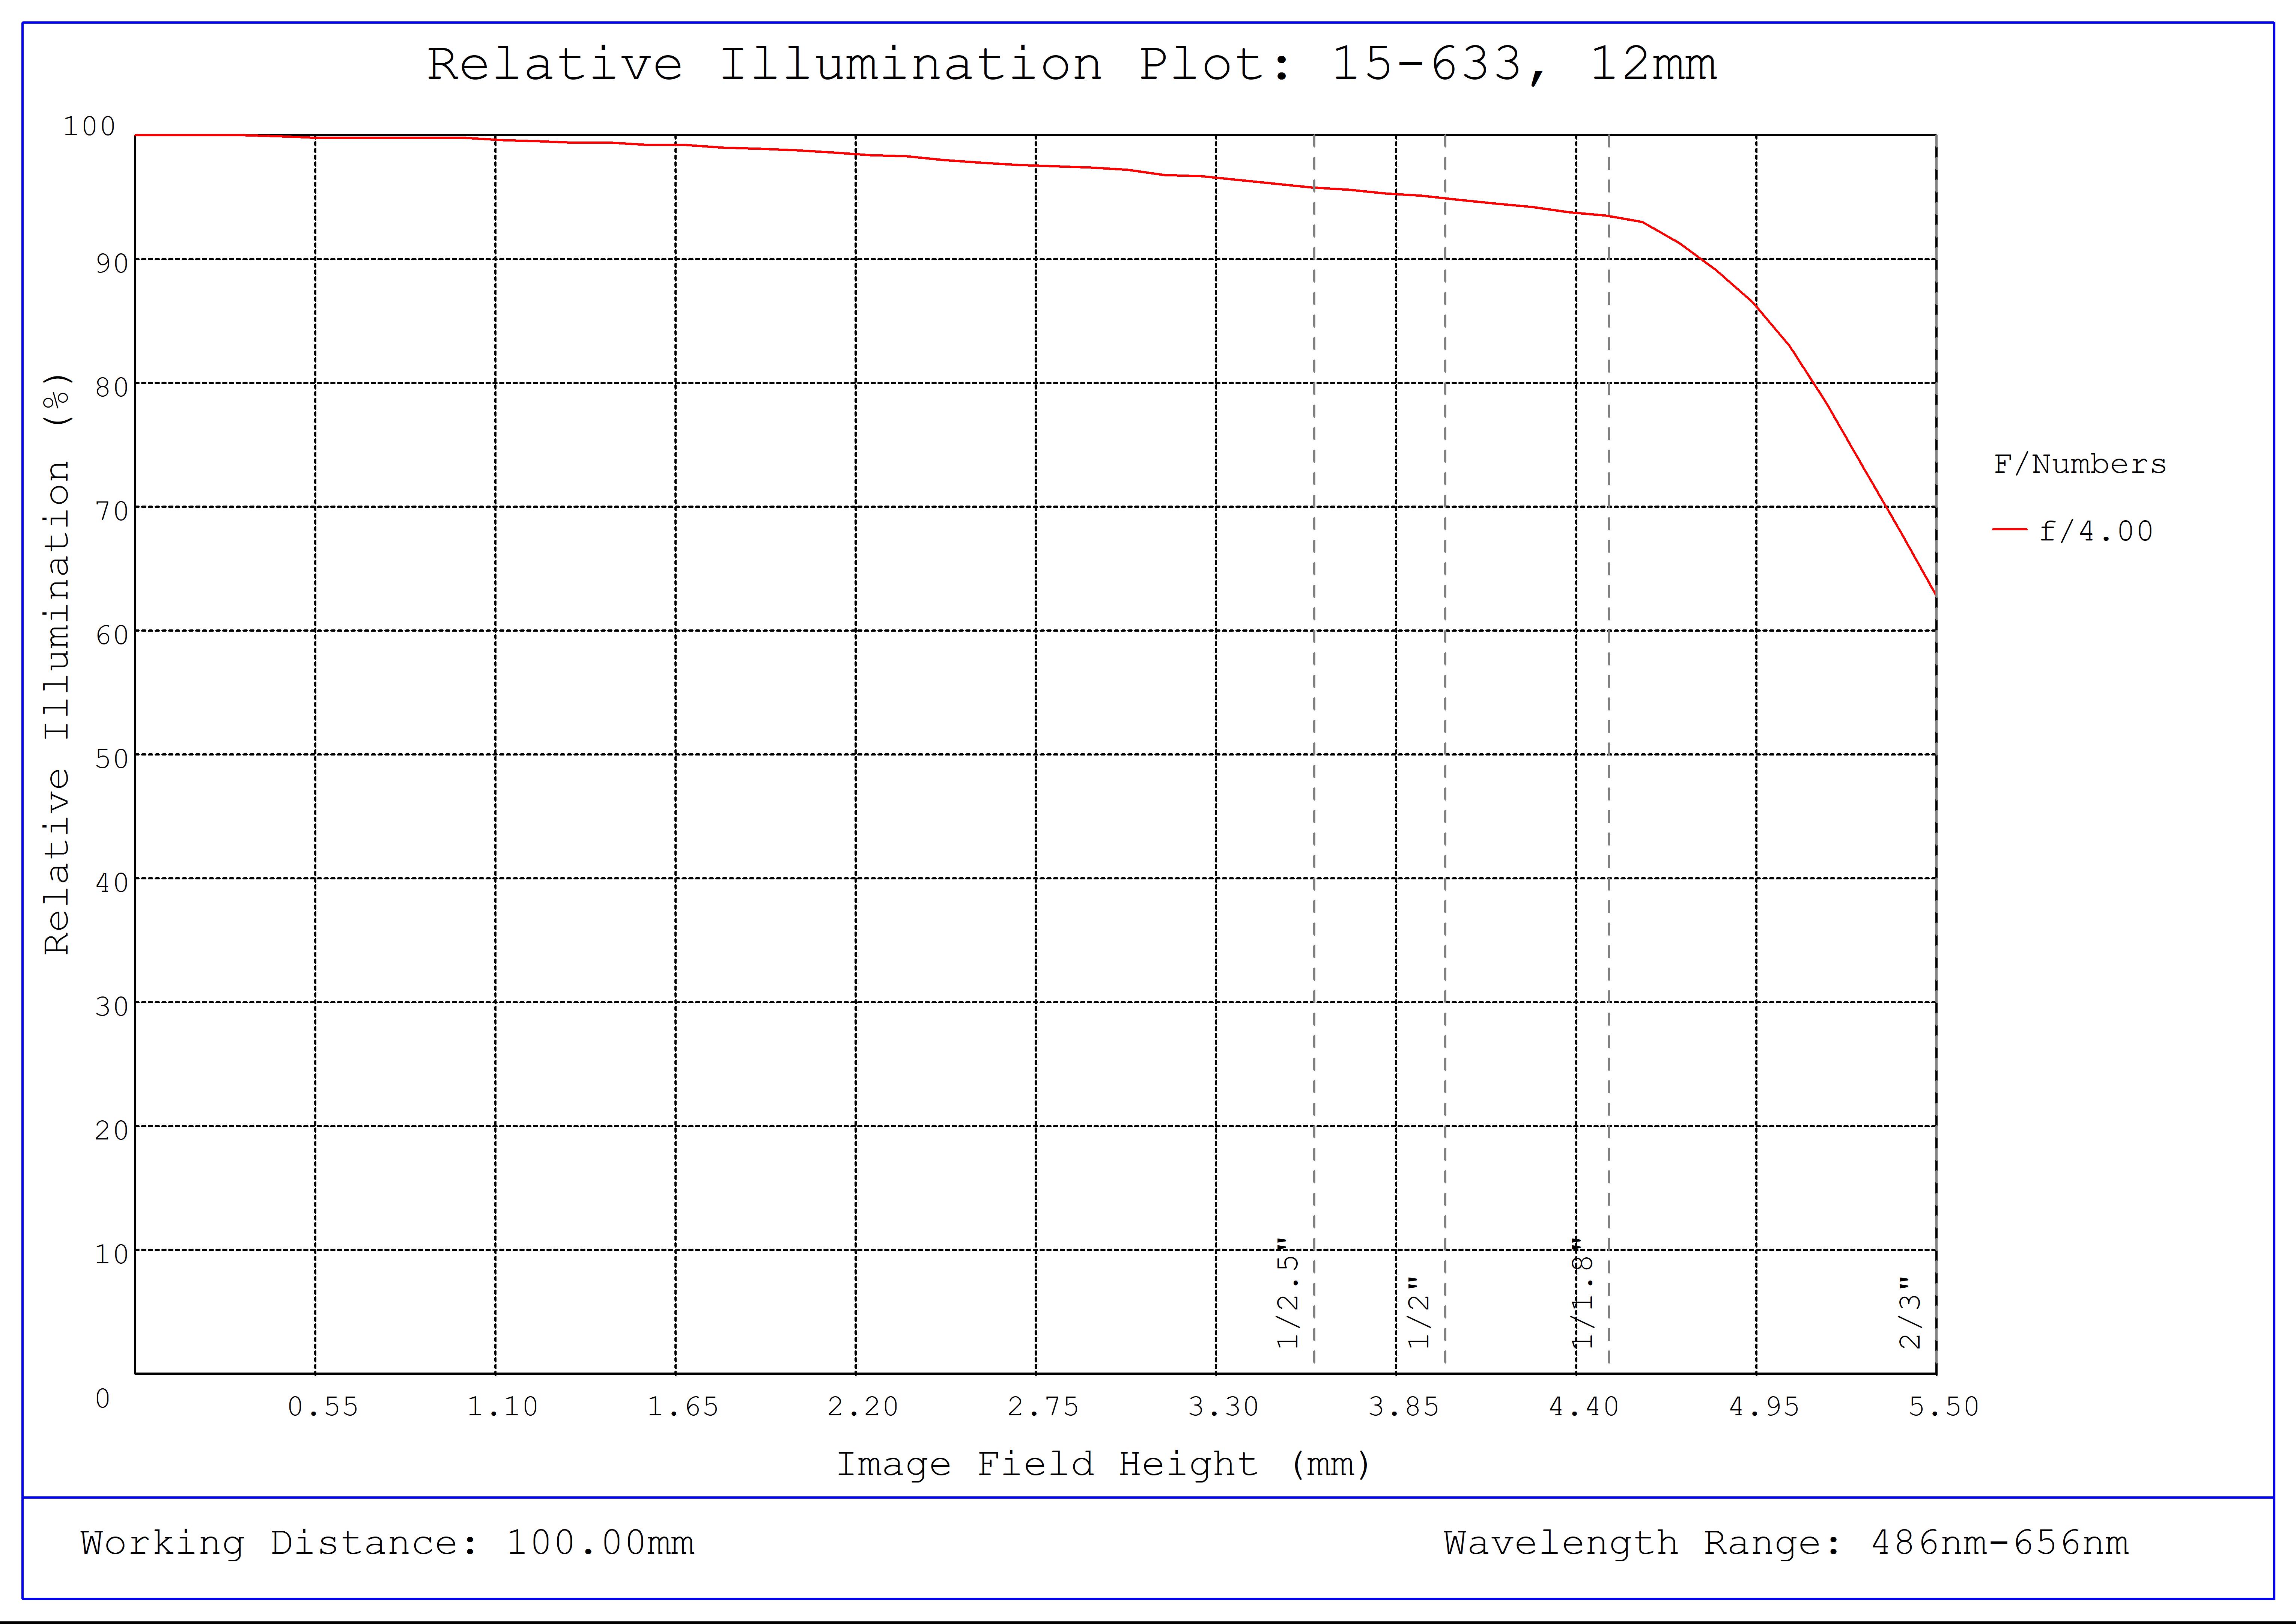 #15-633, 12mm, f/4 Cw Series Fixed Focal Length Lens, Relative Illumination Plot